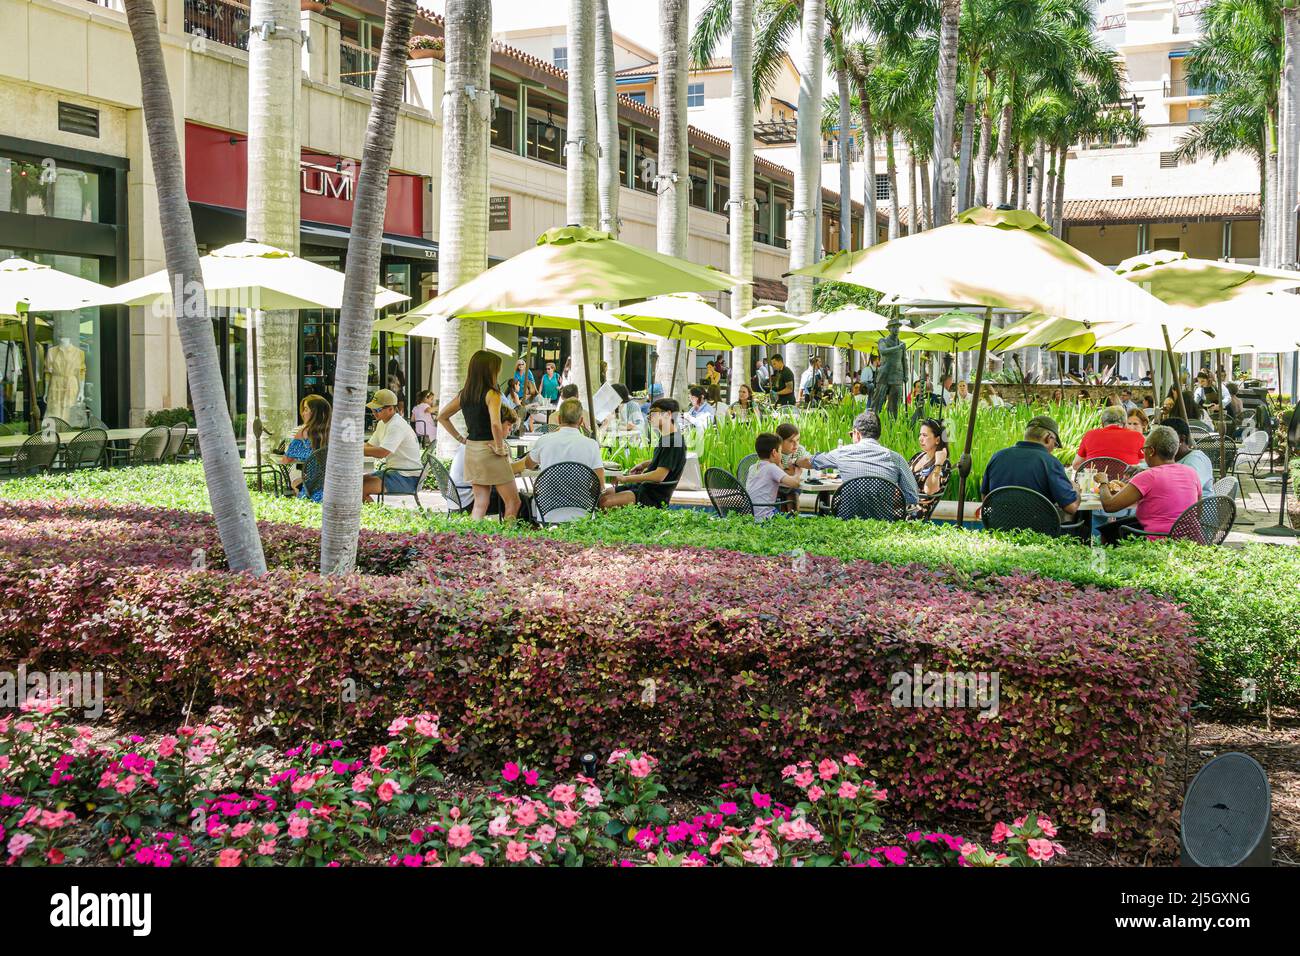 Miami Florida Coral Gables Shops at Merrick Park upscale outdoor shopping mall Sawa Restaurant & Lounge al fresco dining umbrellas Stock Photo